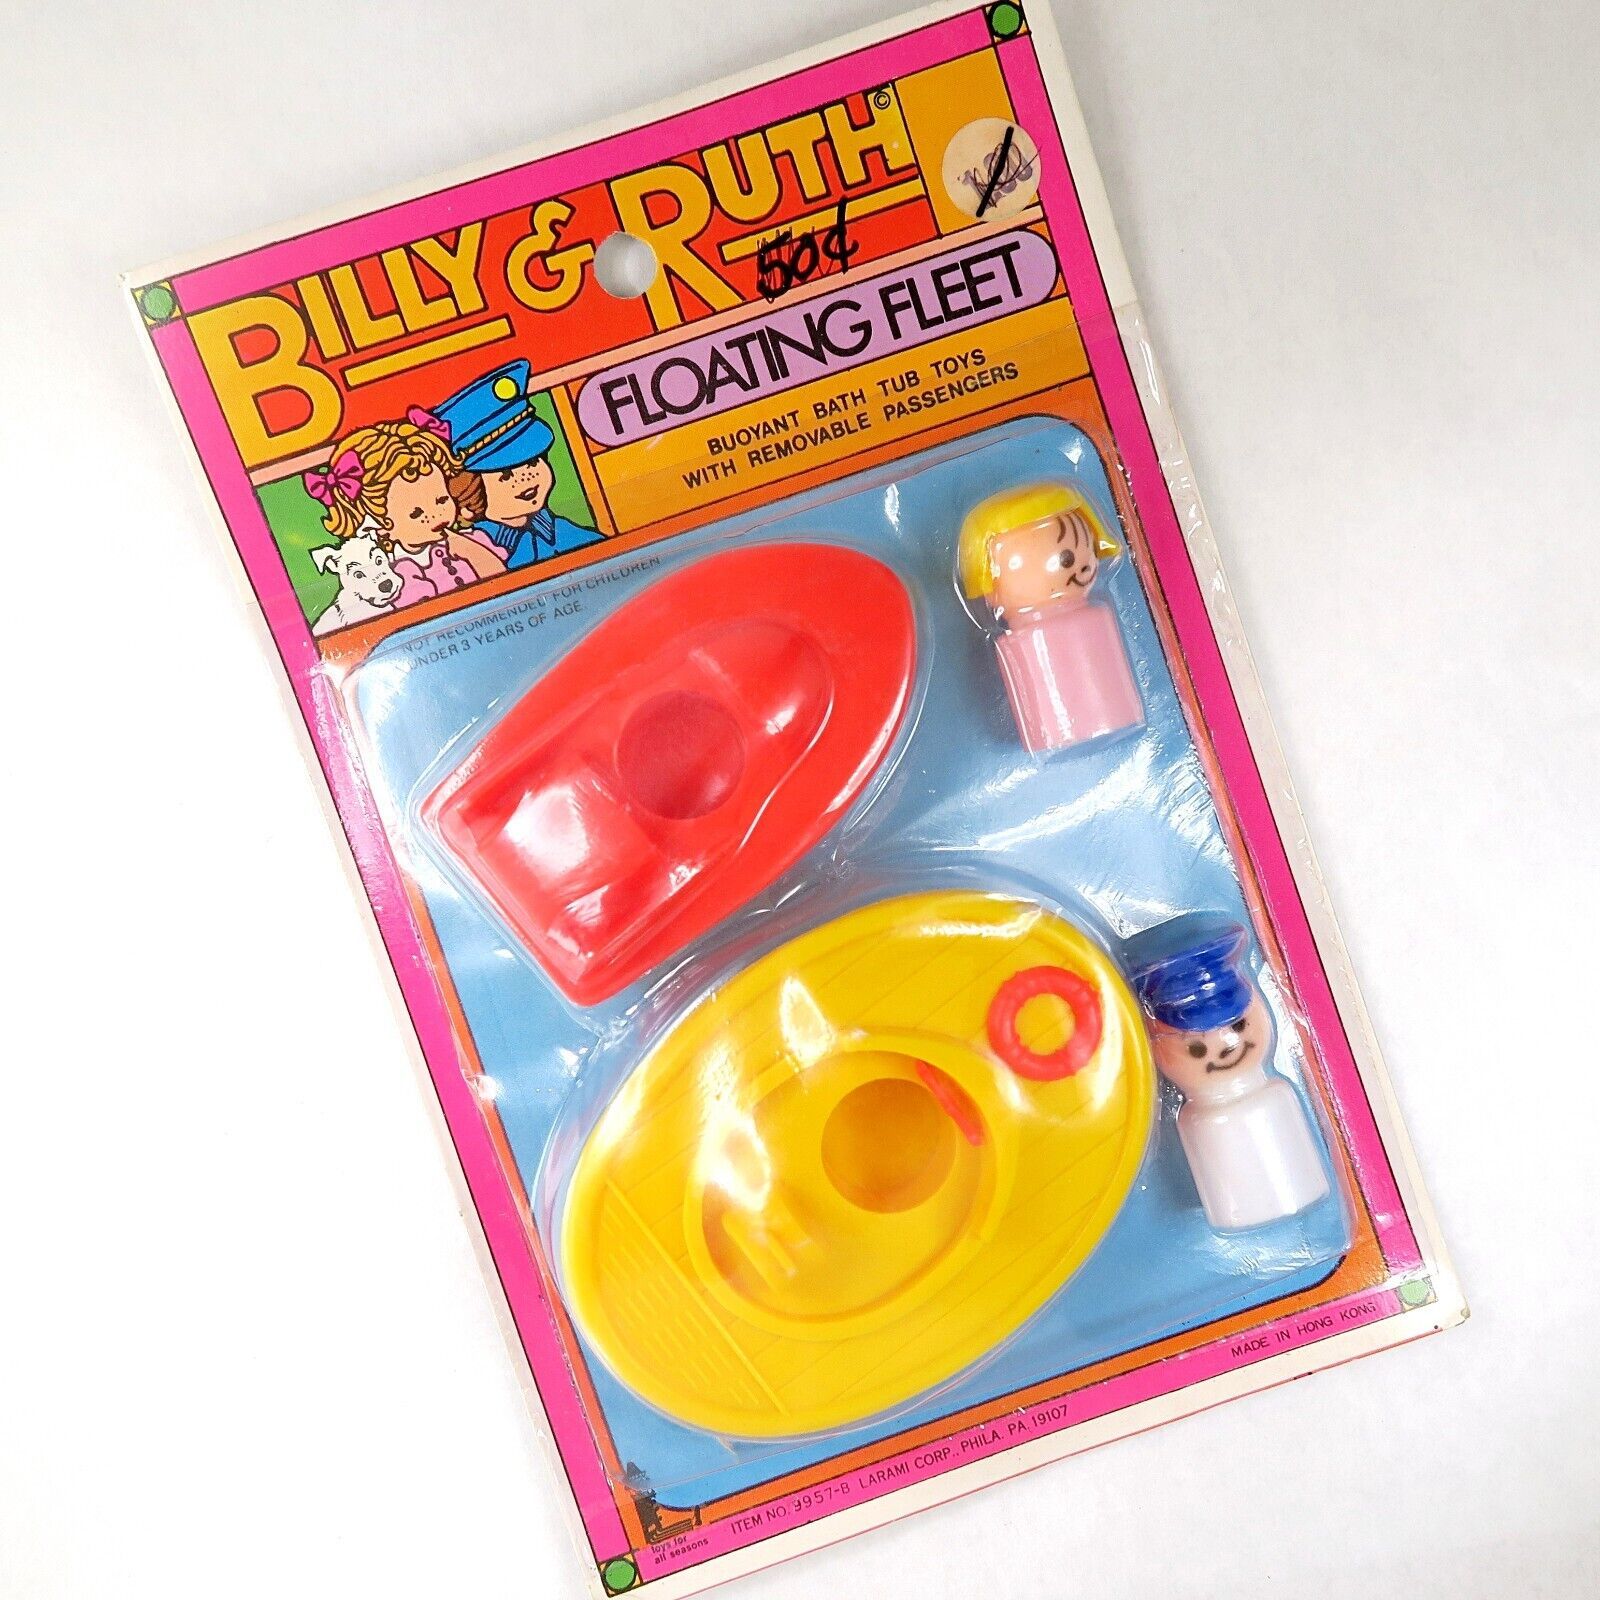 Billy & Ruth Floating Fleet Playset Vintage 1970s Larami Little People Toys New - $49.70